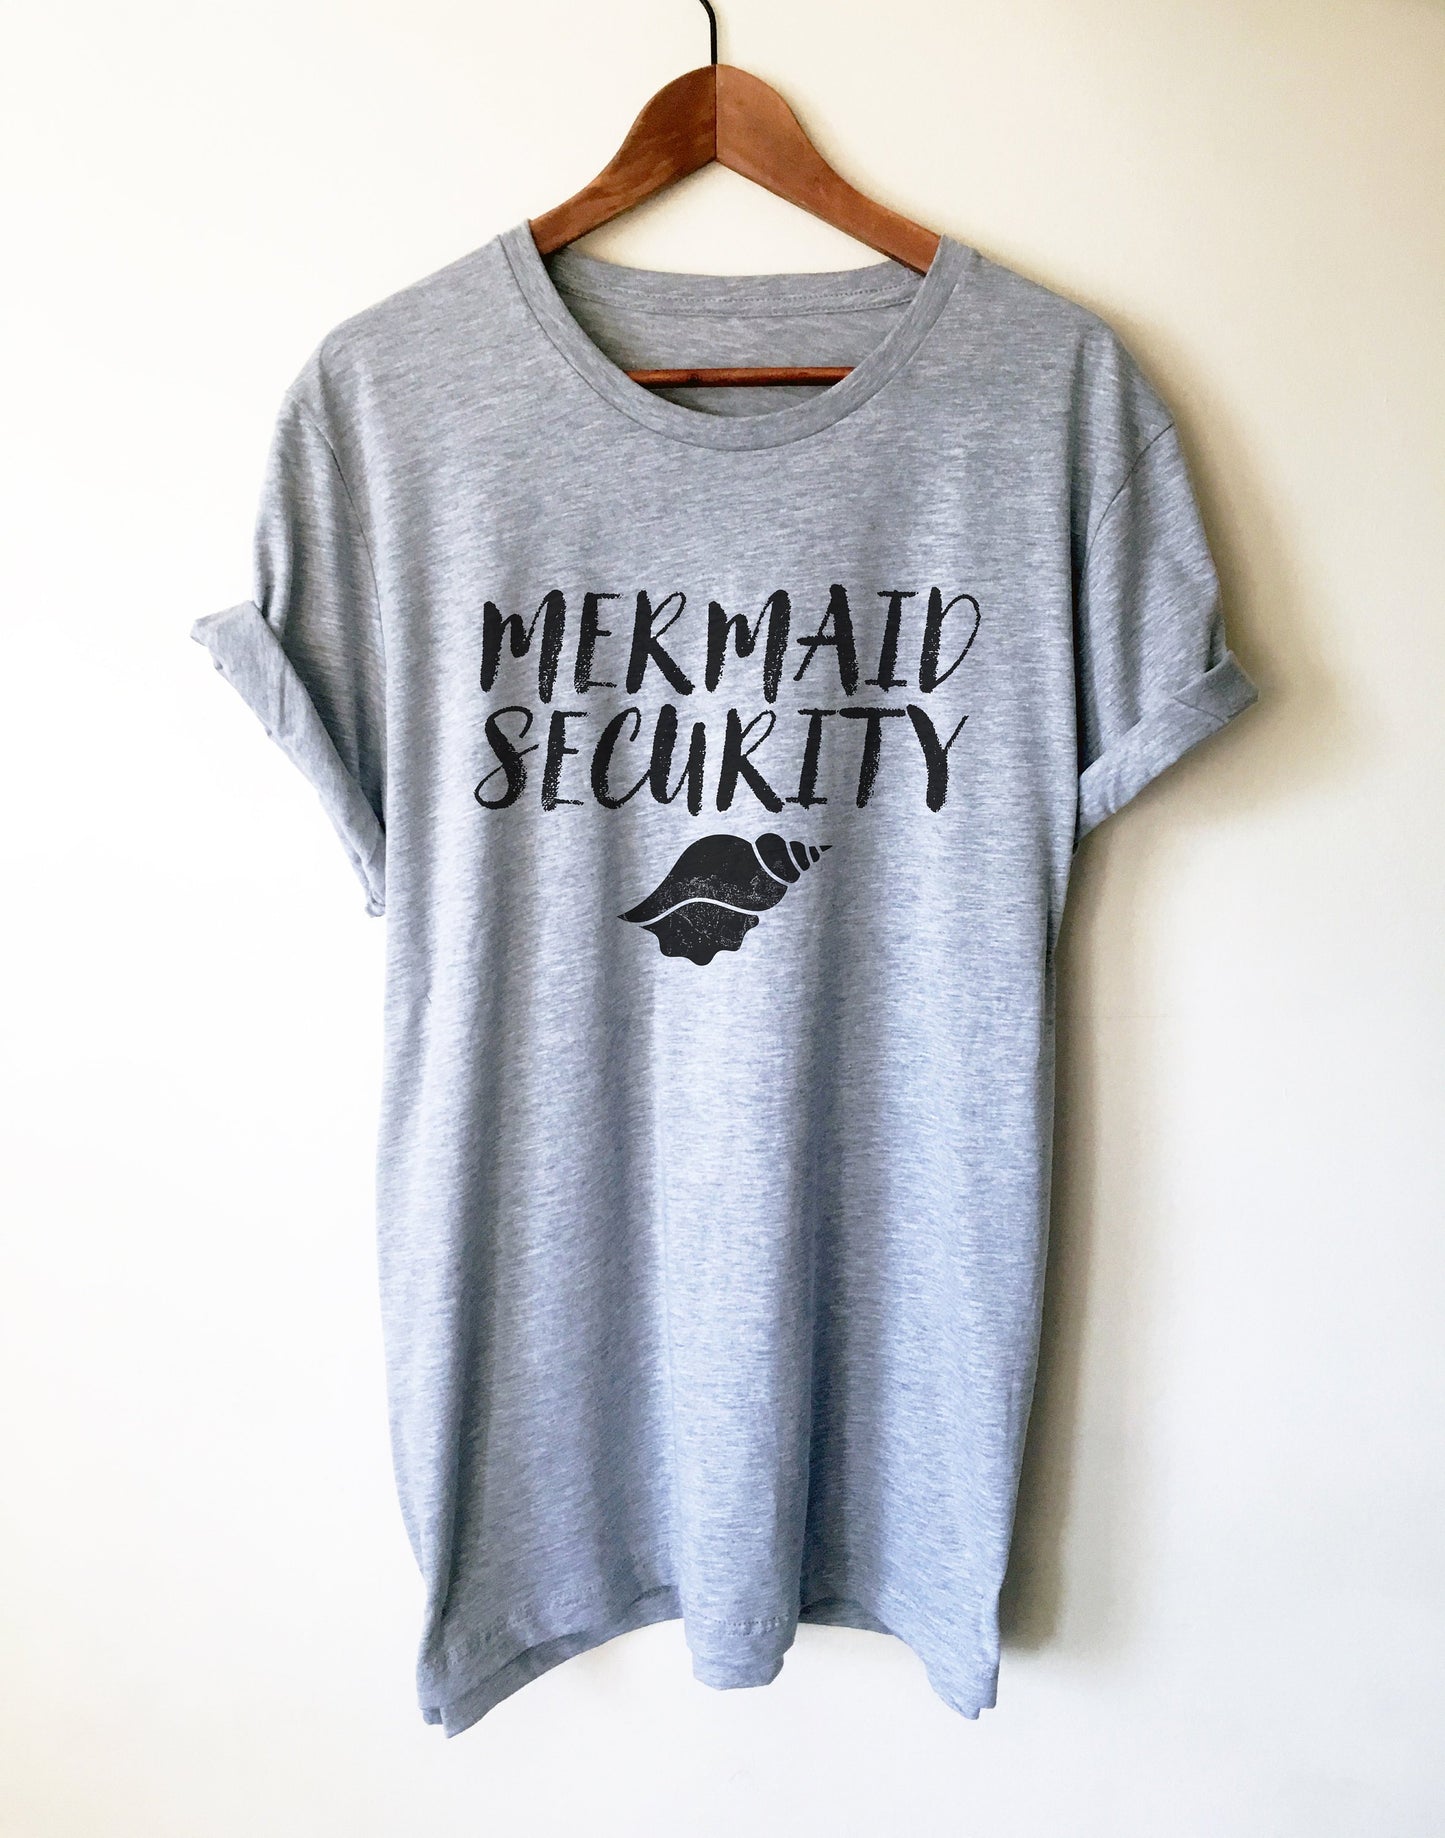 Mermaid Security Unisex Shirt - Mermaid Shirt, Mermaid Gift, Mermaid Birthday, Mermaid Party, Mermaid Tail